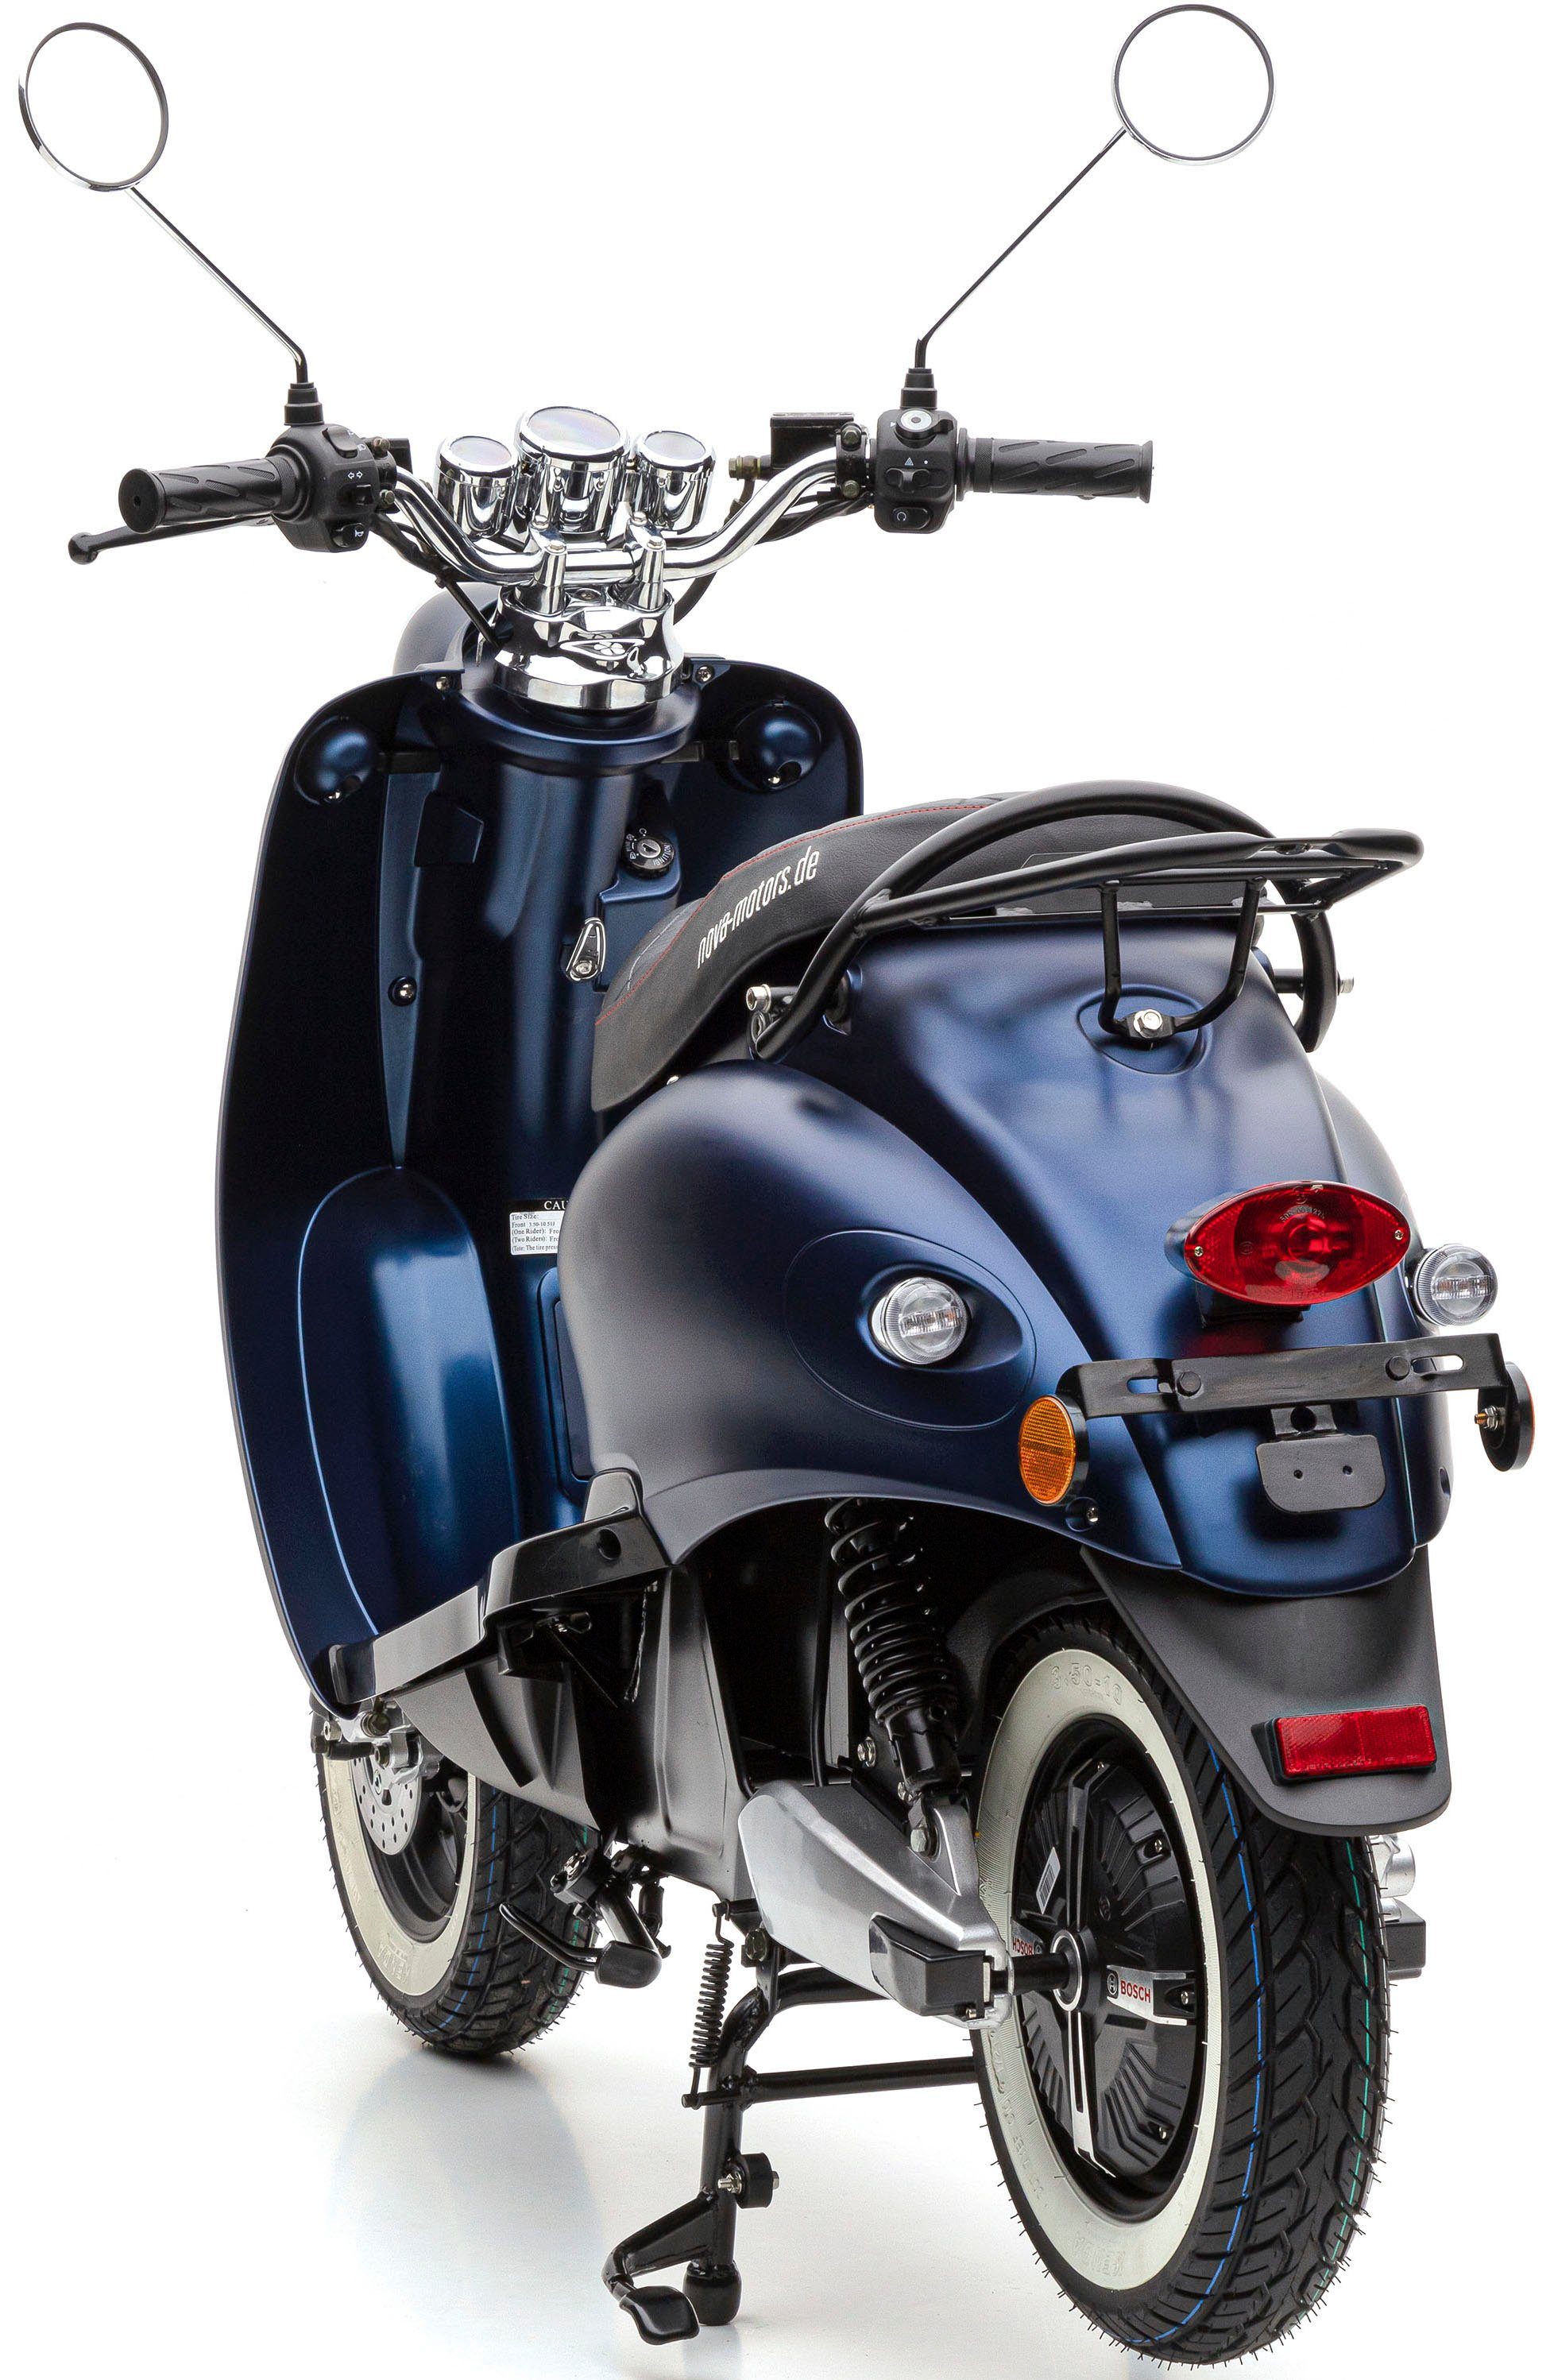 Nova Motors E-Motorroller eRetro Star Li Premium, 2000 W, 45 km/h, Mit Weißwandreifen, digitalem Tacho und gesteppter Sitzbank blau